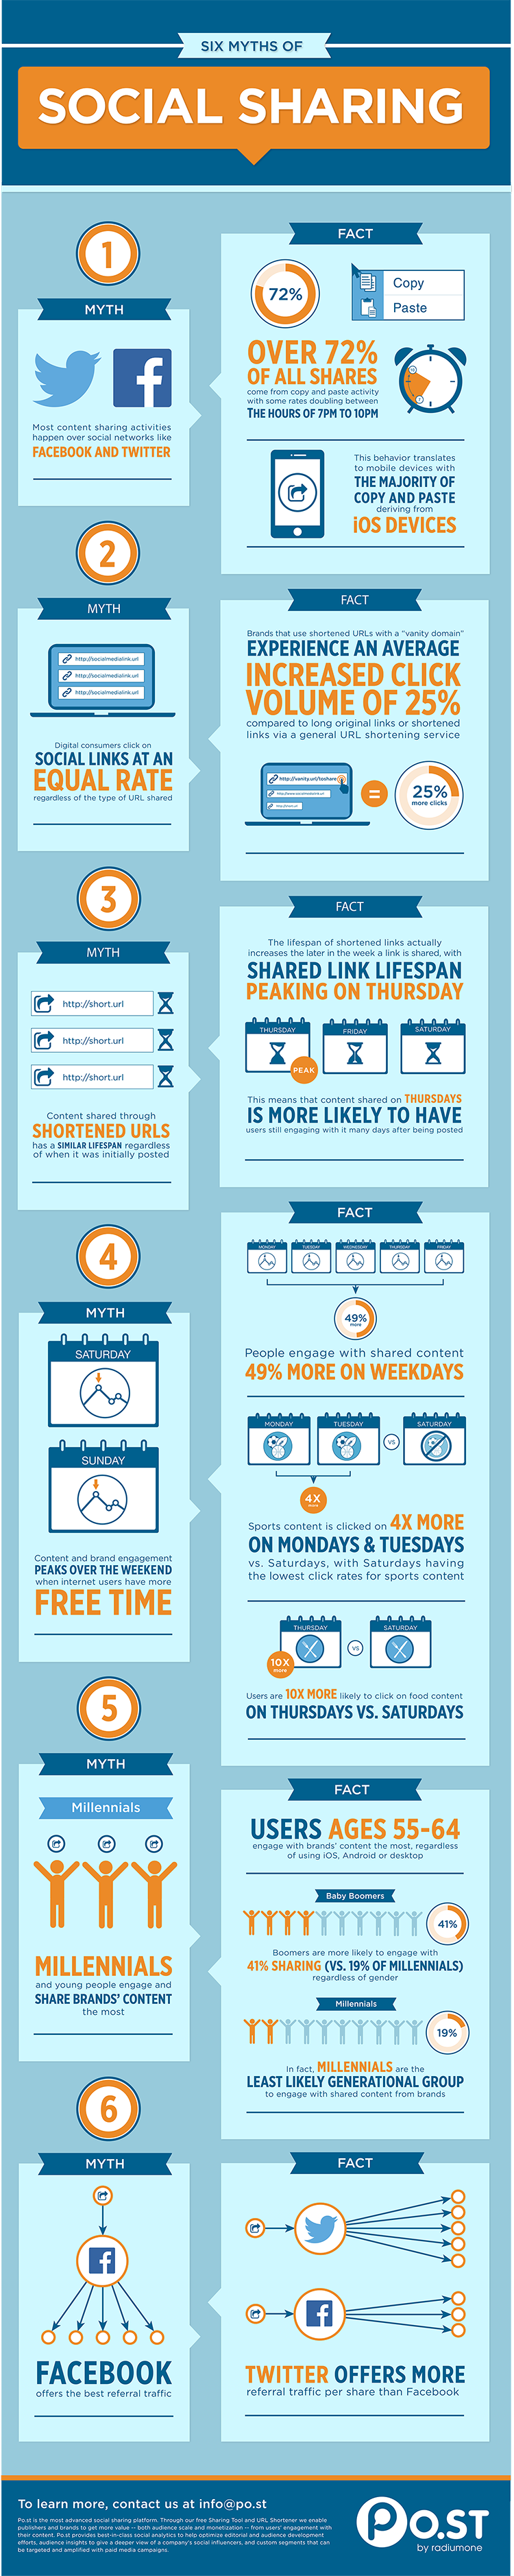 6 Myths Of #SocialMedia Sharing - #infographic #Tips